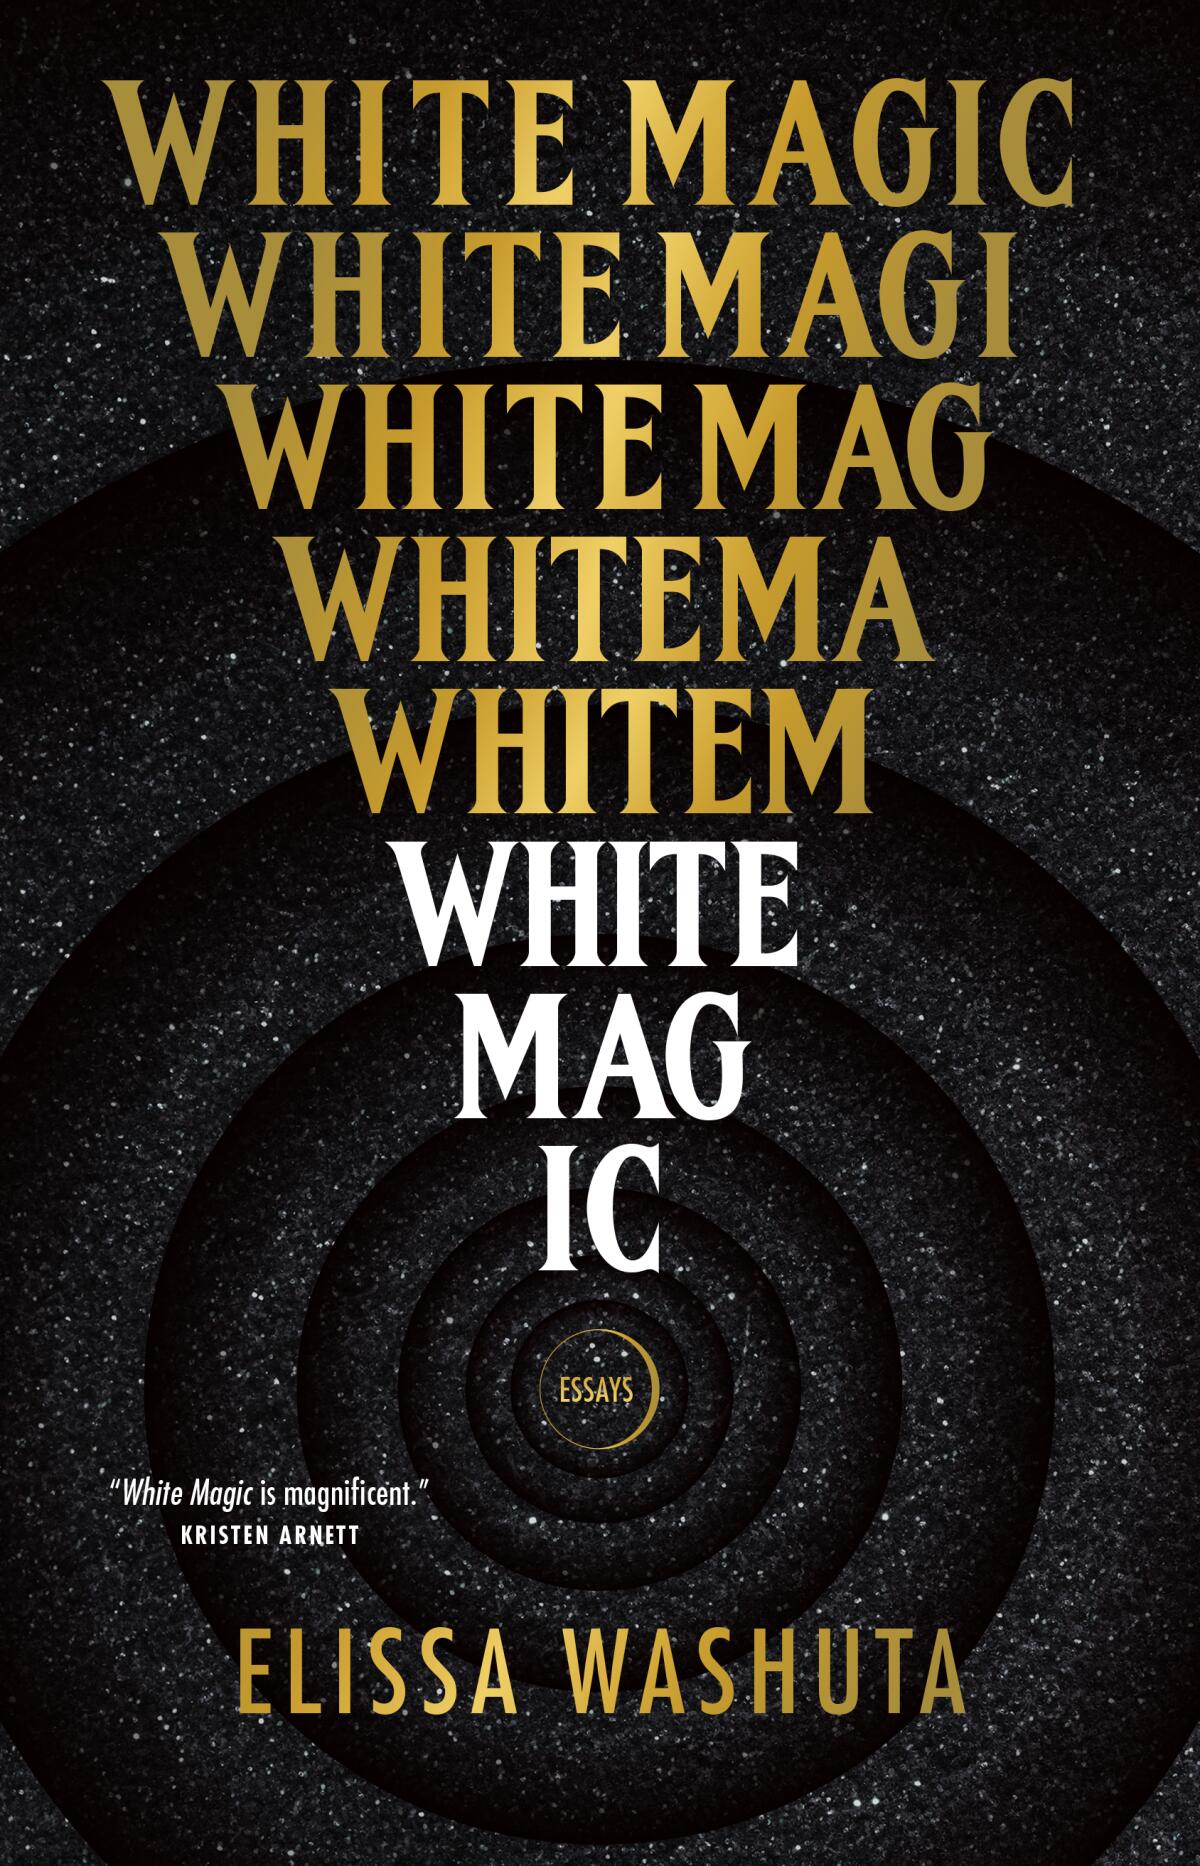 "White Magic," by Elissa Washuta